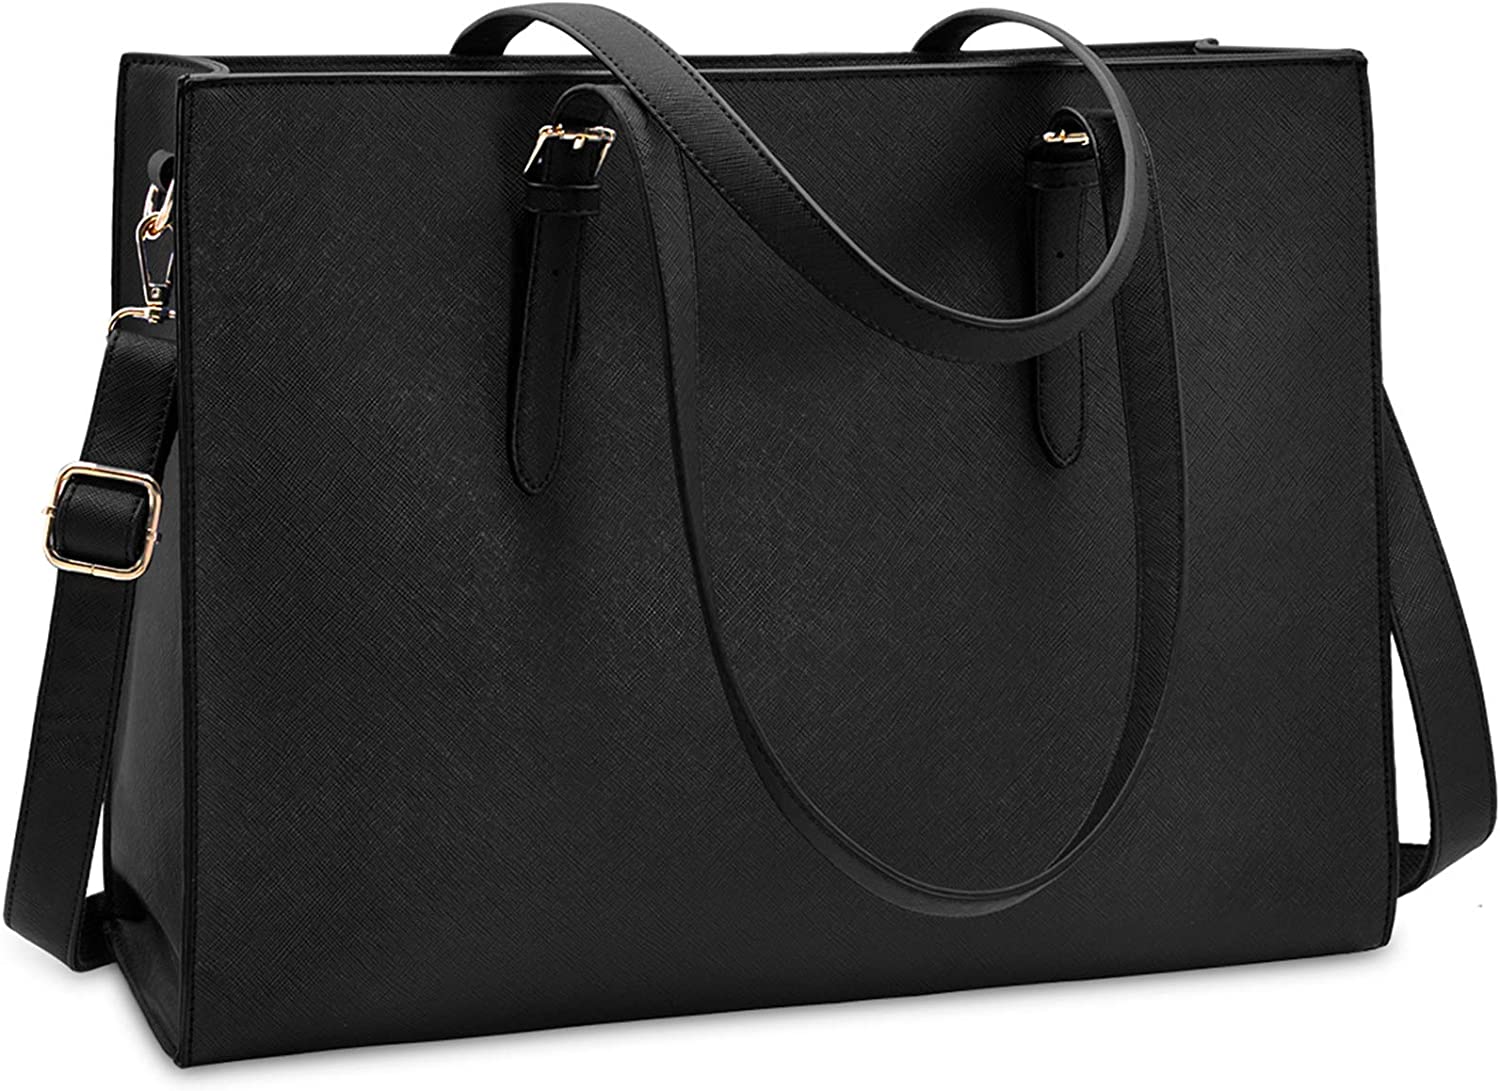 Laptop Tote Bag for Women 17.3 Inch Laptop Bag Waterproof Nylon Teacher Bag  Work Bag with USB Chargi…See more Laptop Tote Bag for Women 17.3 Inch